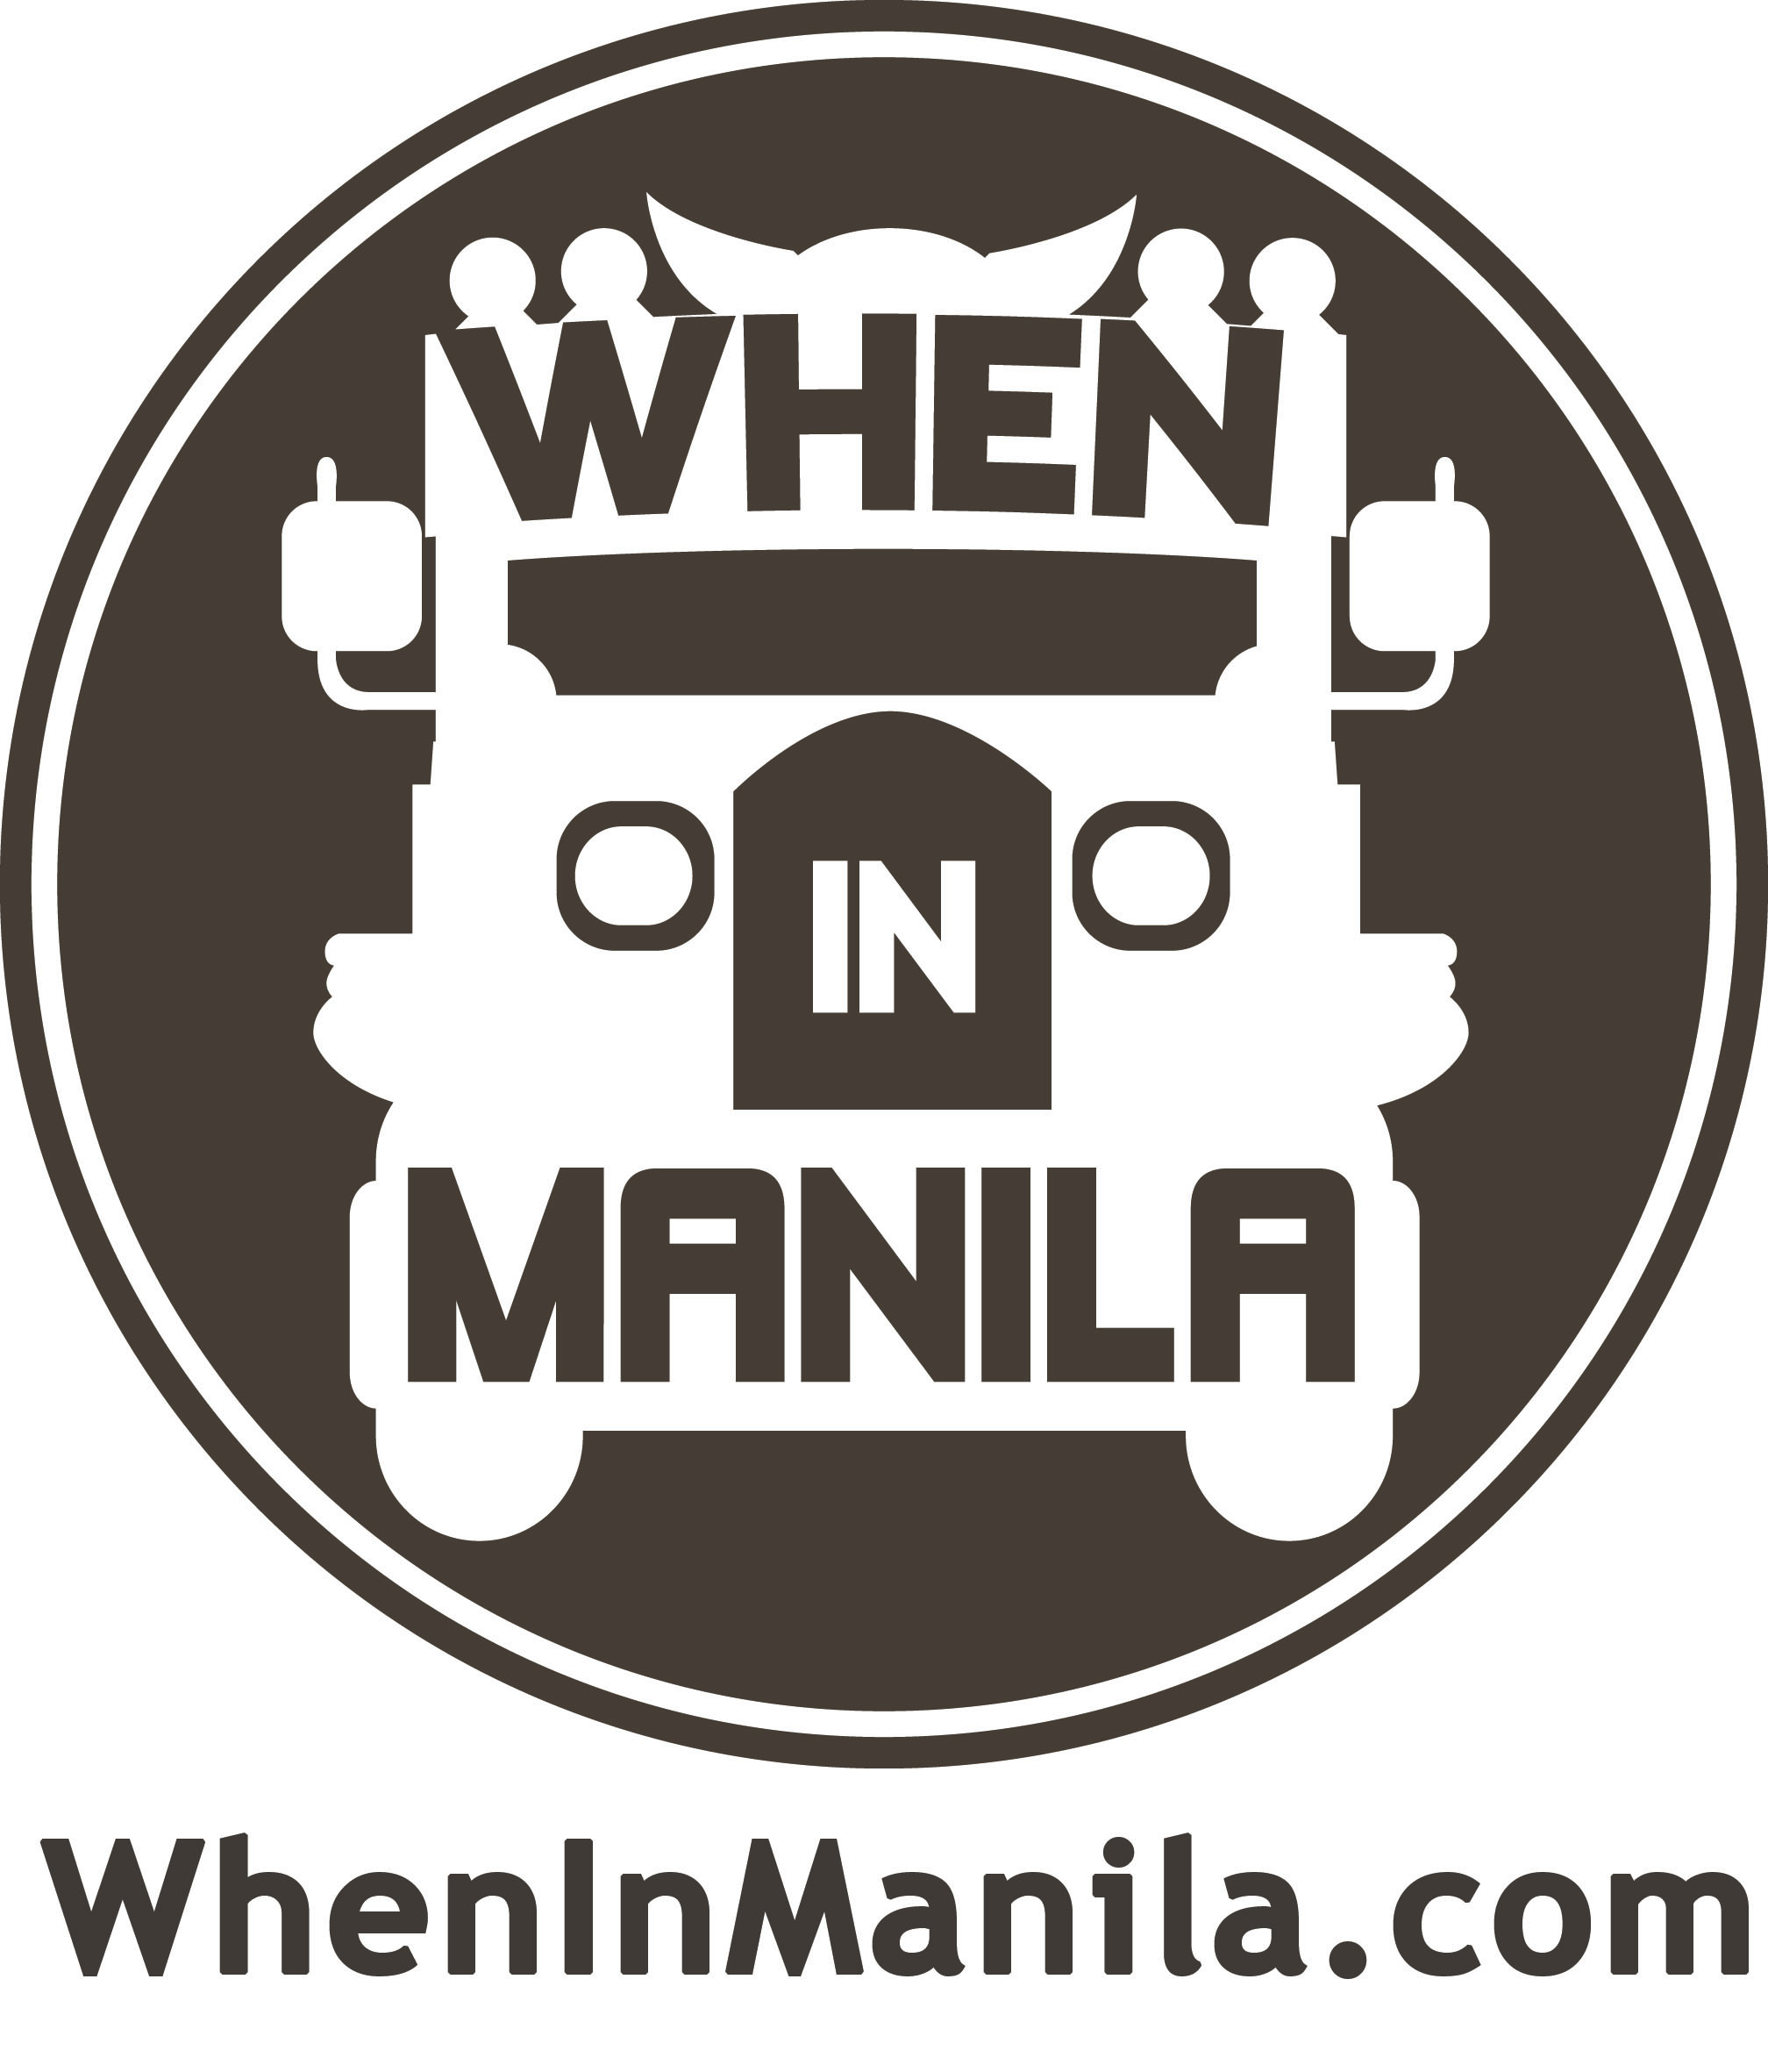 WhenInManila-com-HiRes-logo.jpg